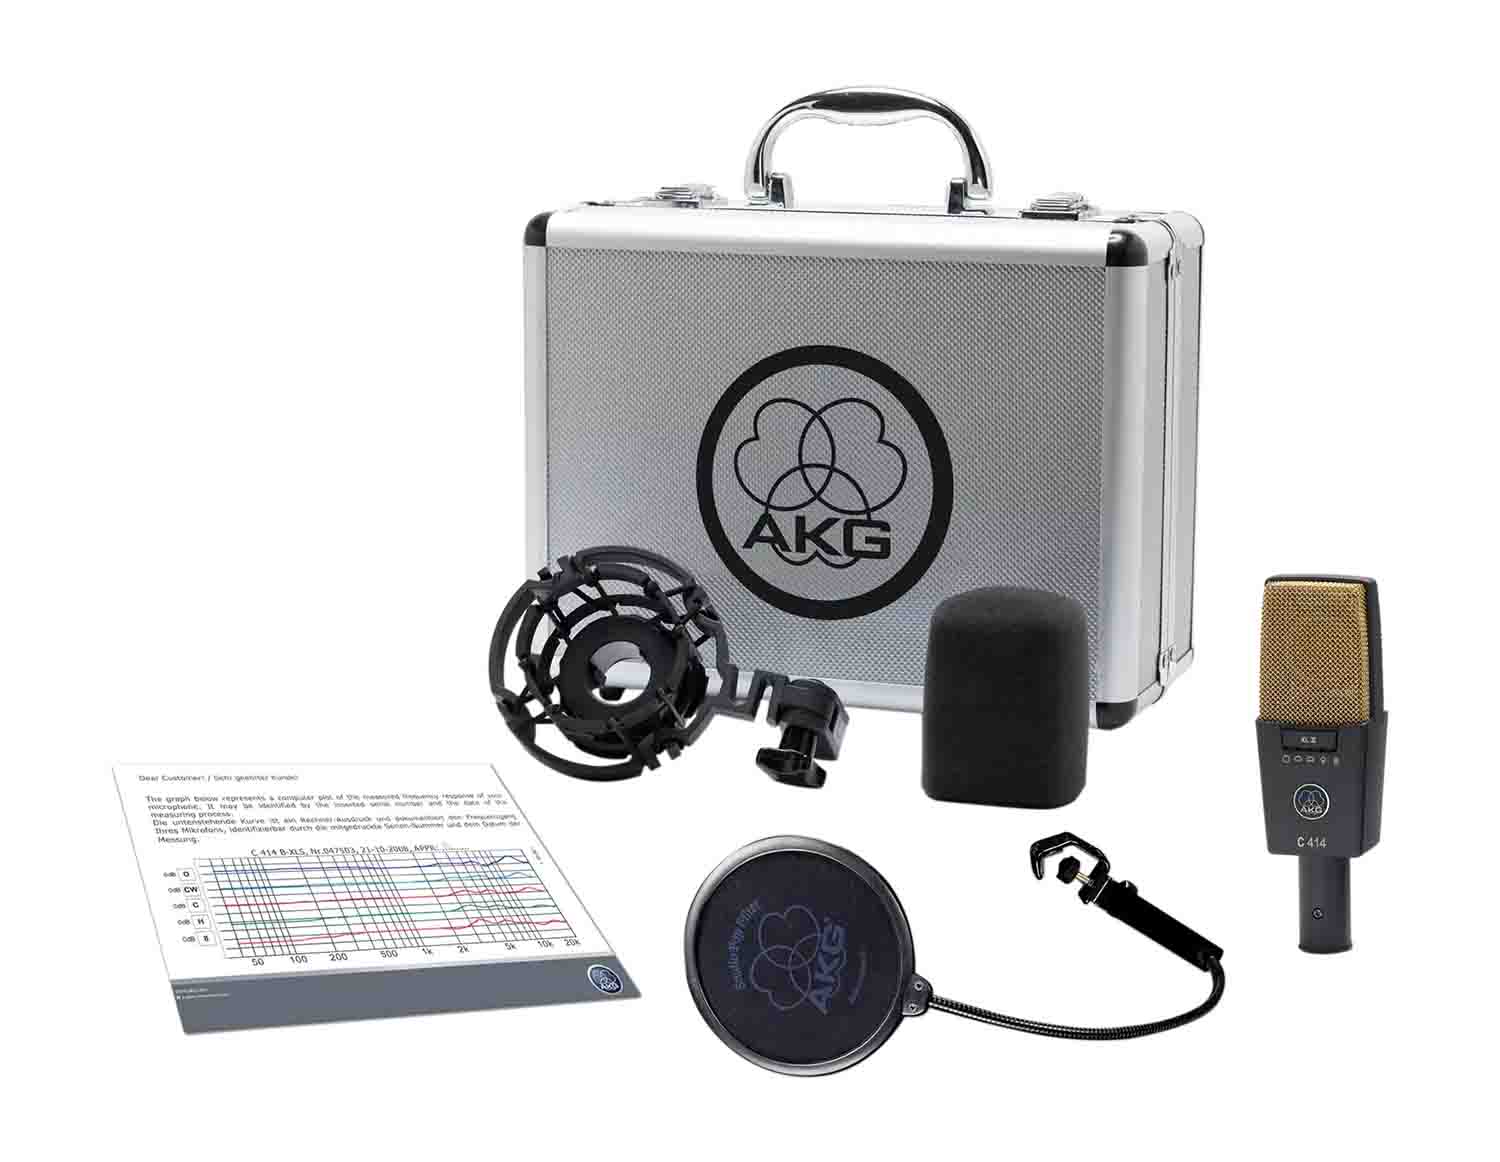 AKG C414 XLII Large-Diaphragm Multipattern Condenser Microphone by AKG